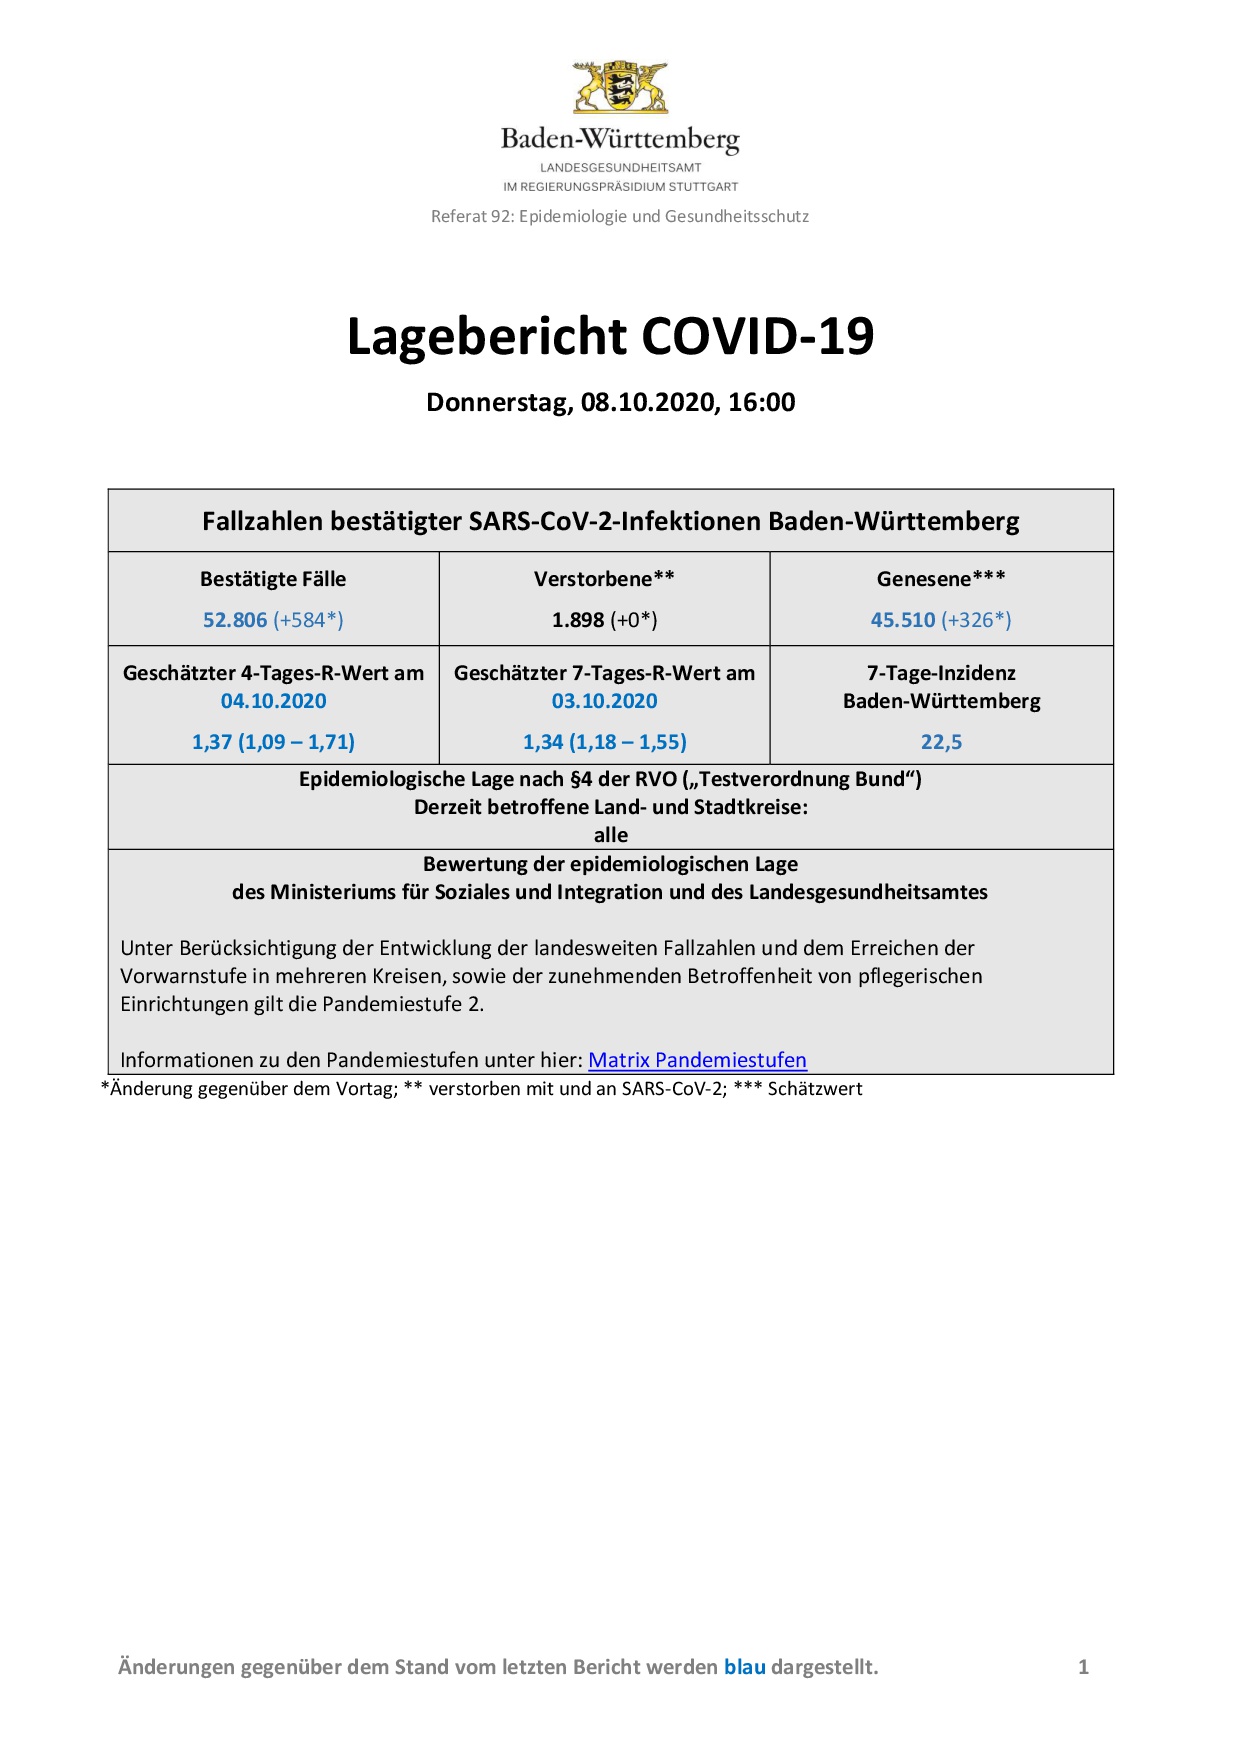 COVID-19 Tagesbericht (08.10.2020) des Landesgesundheitsamts Baden-Württemberg